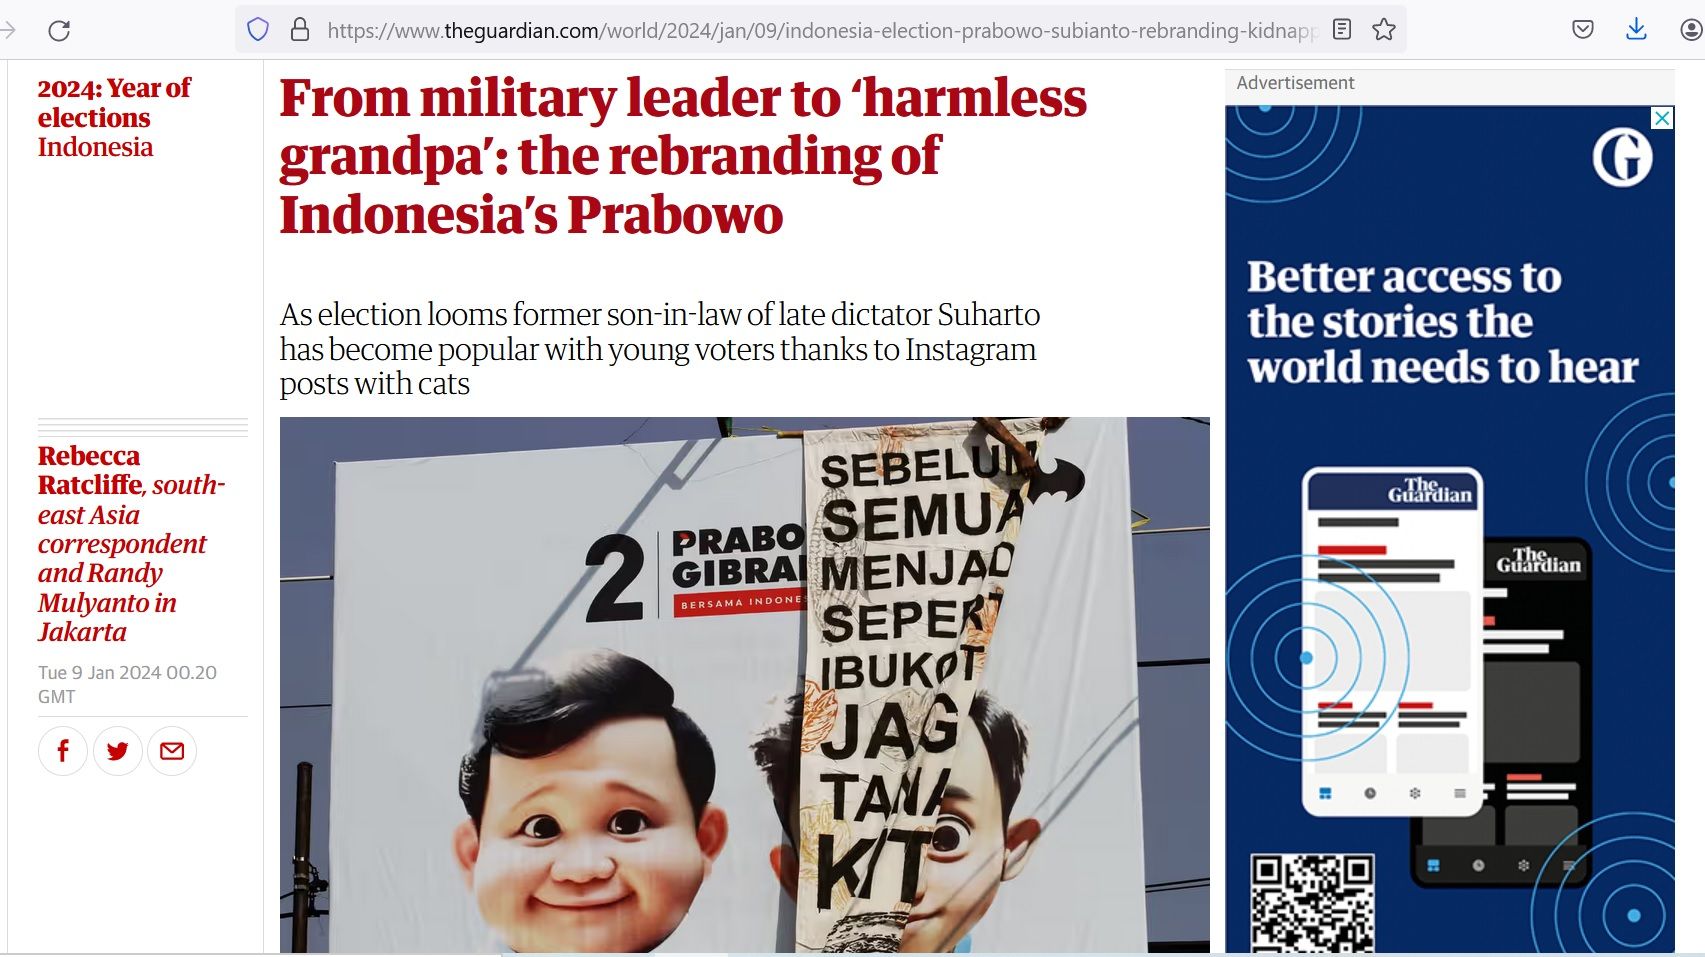 Tangkapan layar artikel The Guardian yang membahas Prabowo Subianto.